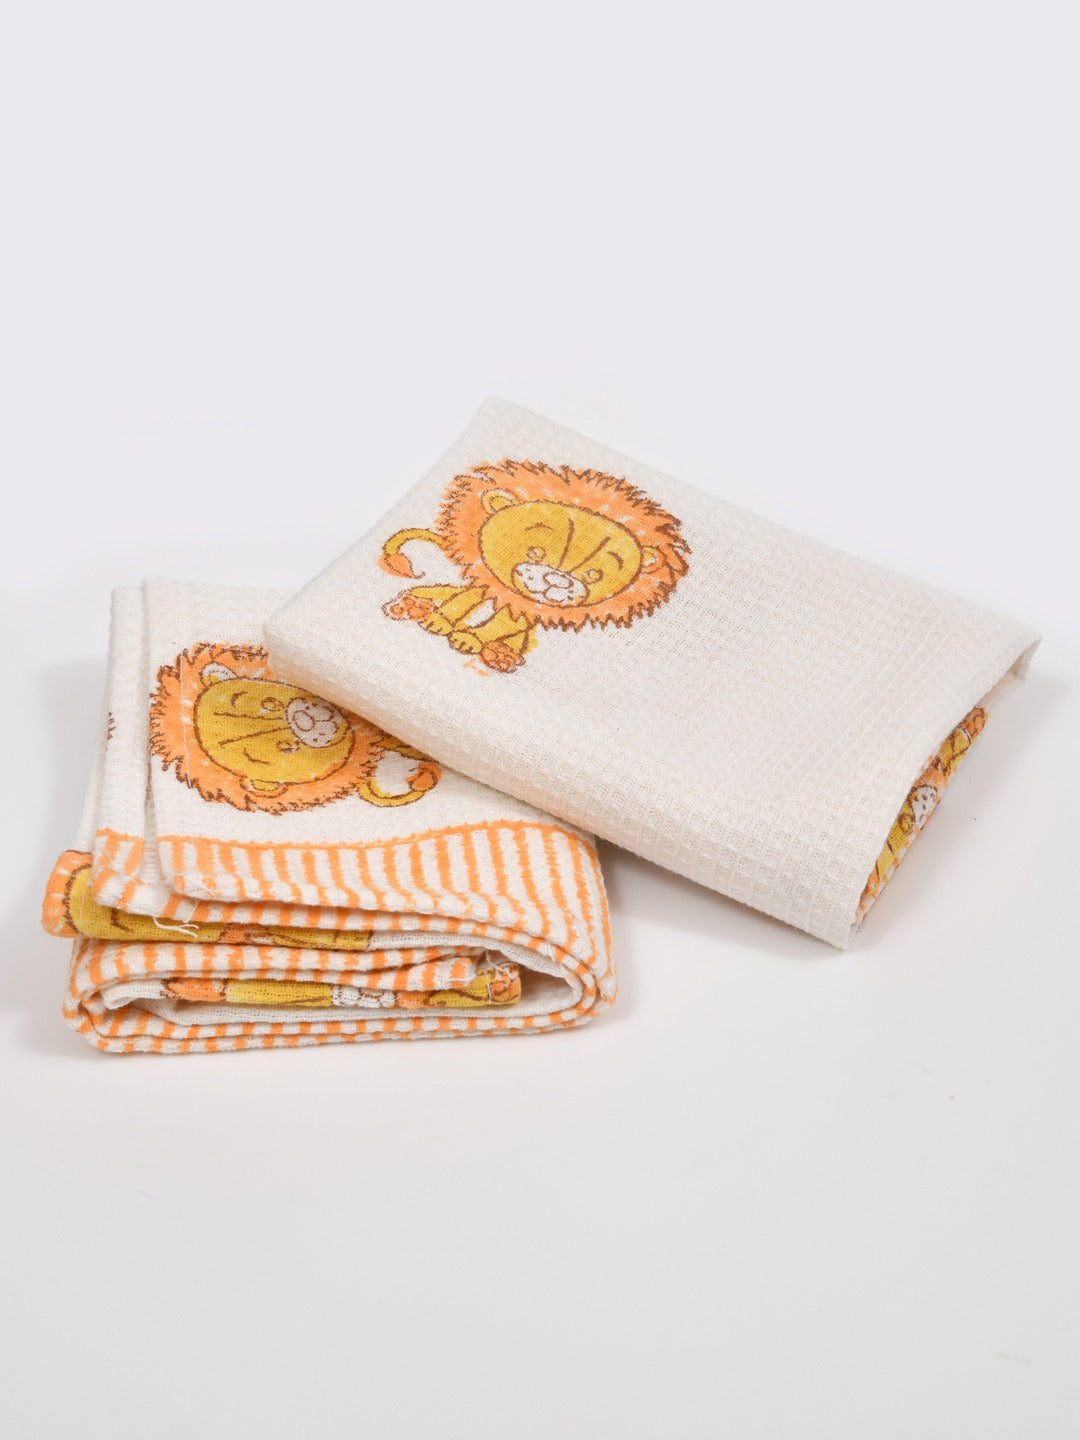 Hand Block Printed Honey Comb Cotton Hand Towel- Set of 2